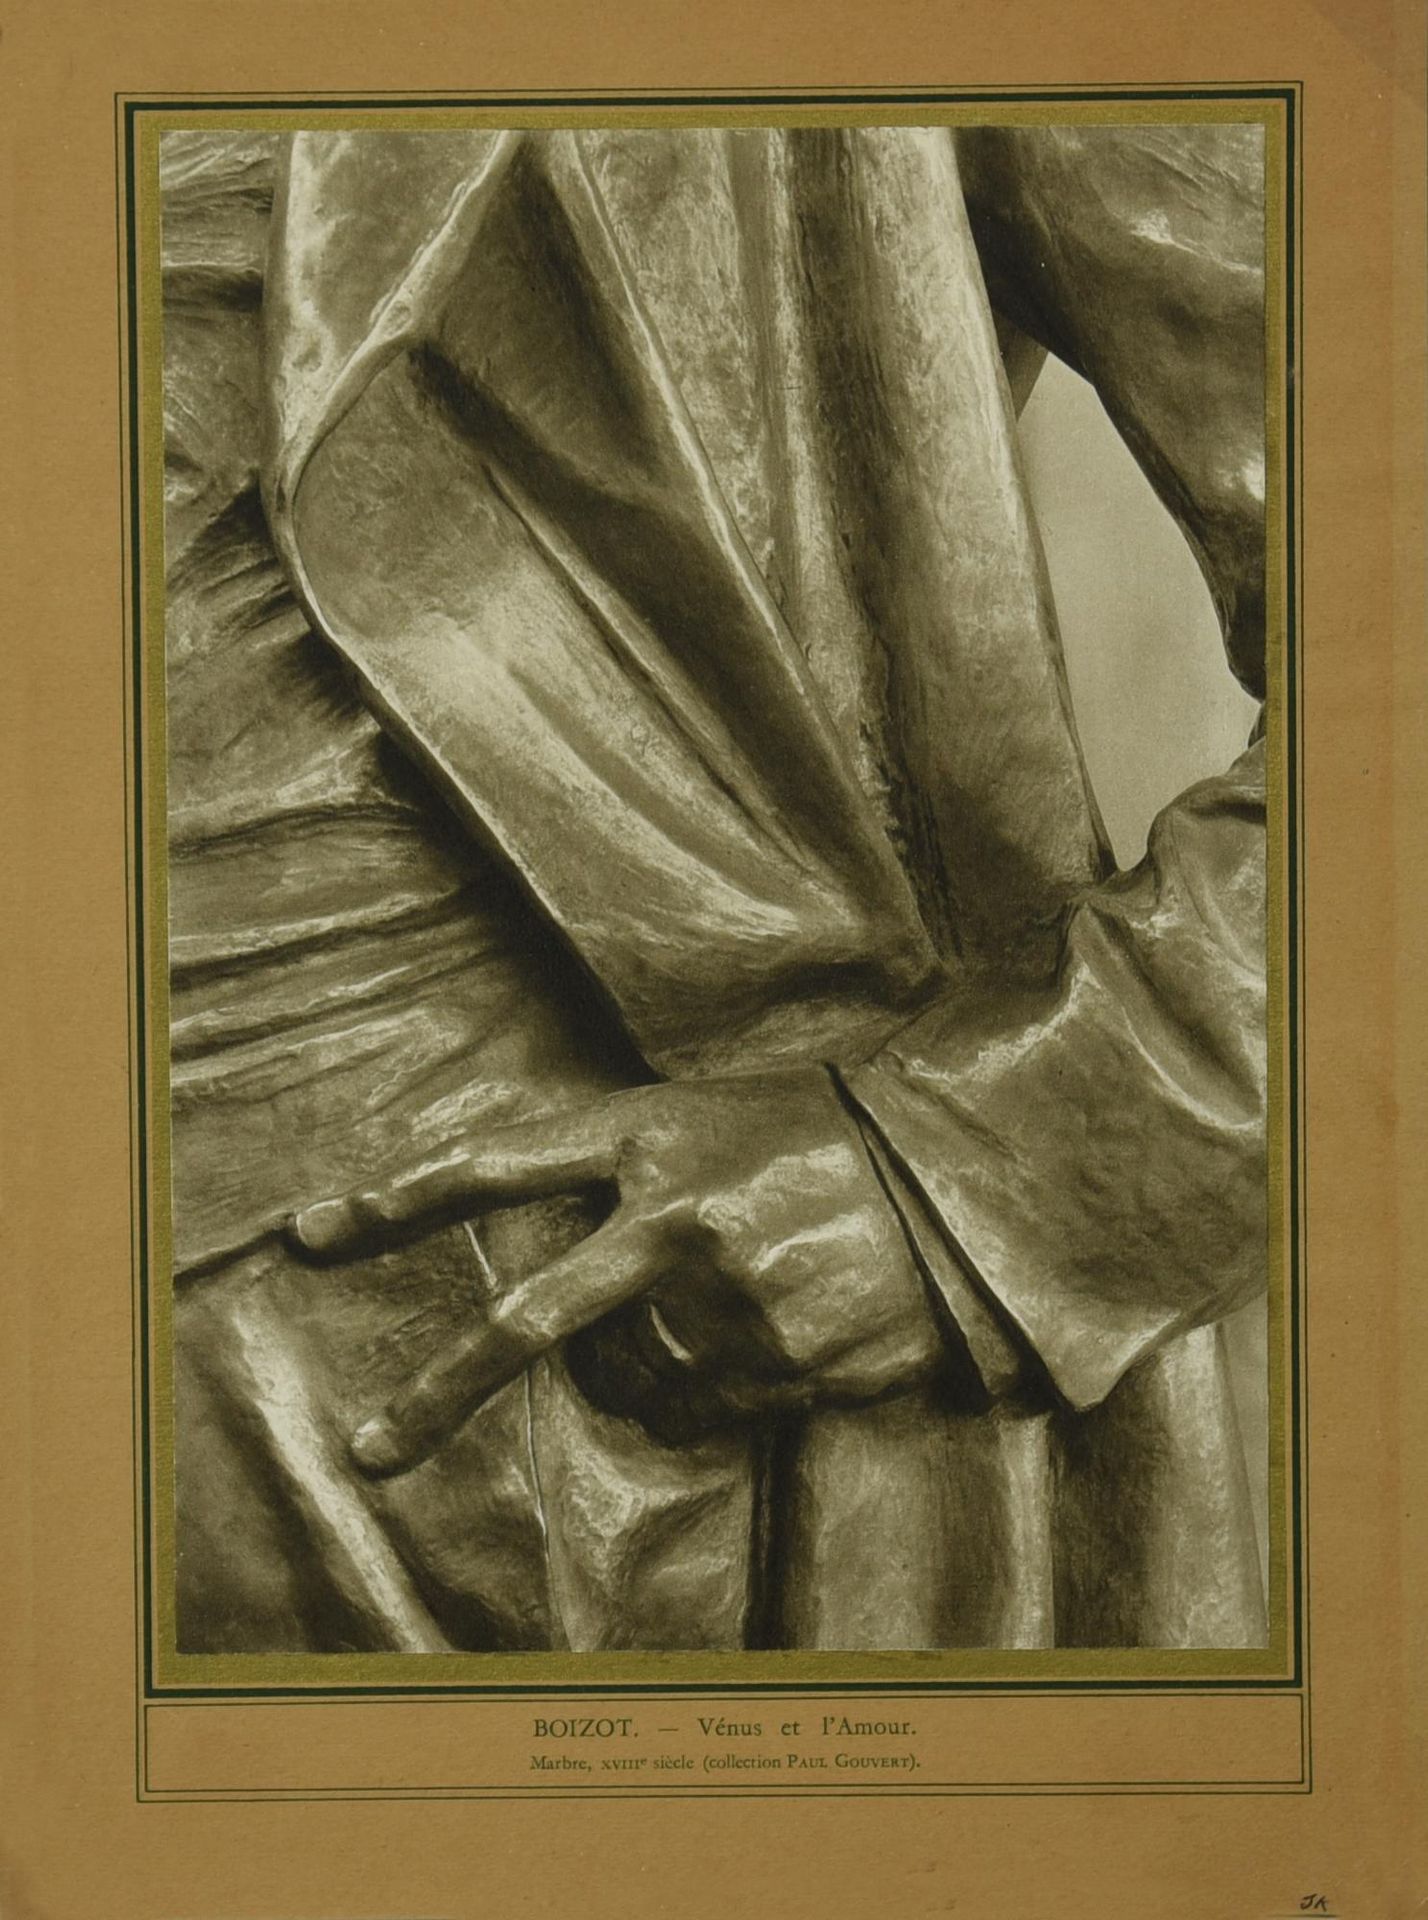 Jiri Kolar Jiri Kolar

BOIZOT VENUS ET L'AMOUR

collage on paper, 26.7x36 cm

in&hellip;